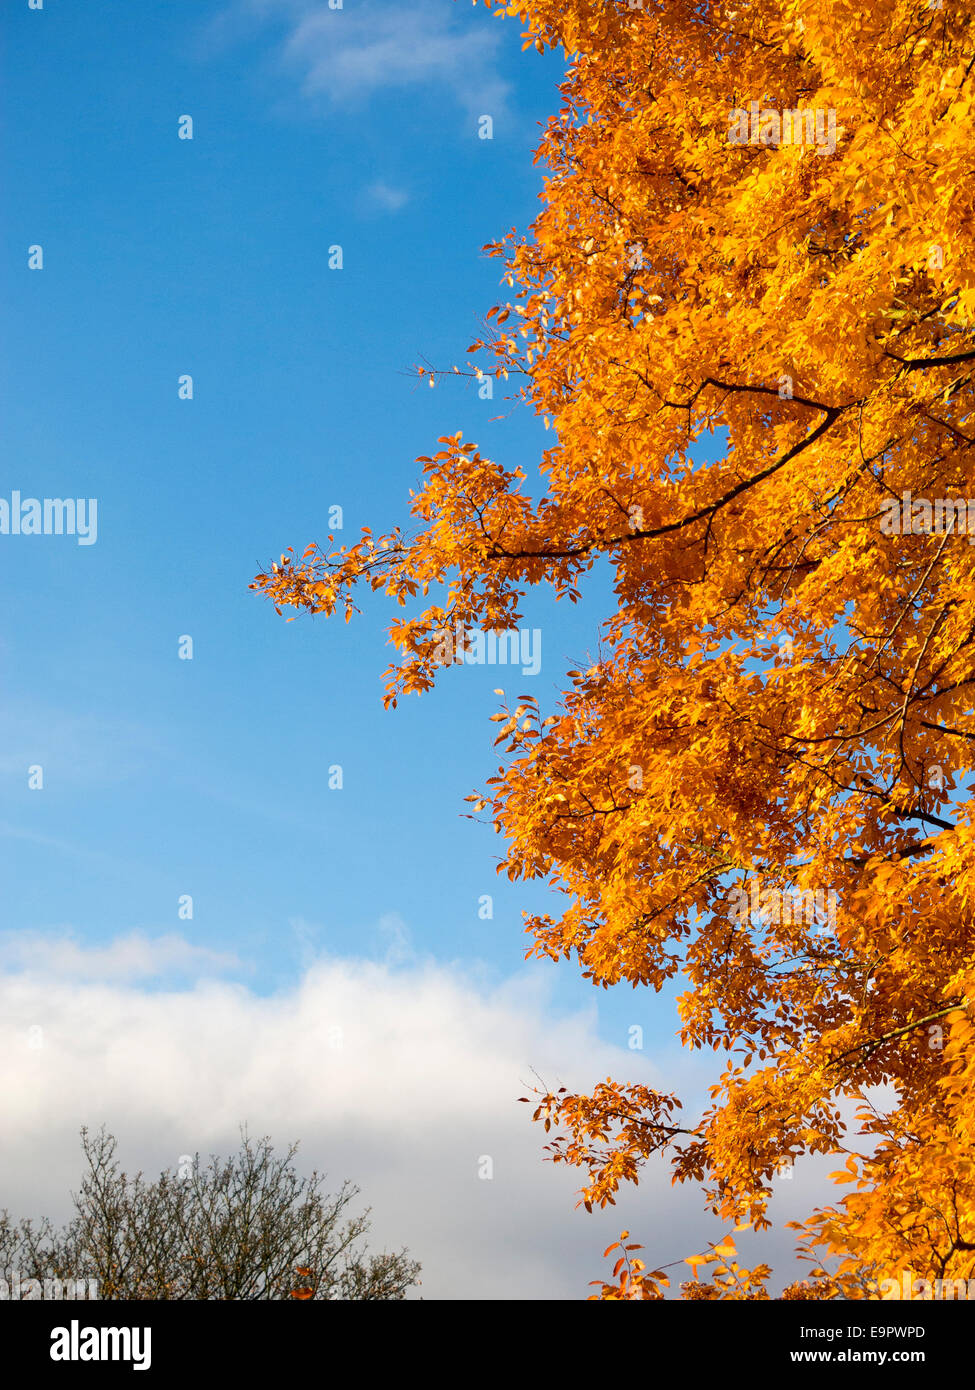 Bright yellow and orange autumn foliage of European Beech (Fagus sylvatica) against a blue sky Stock Photo